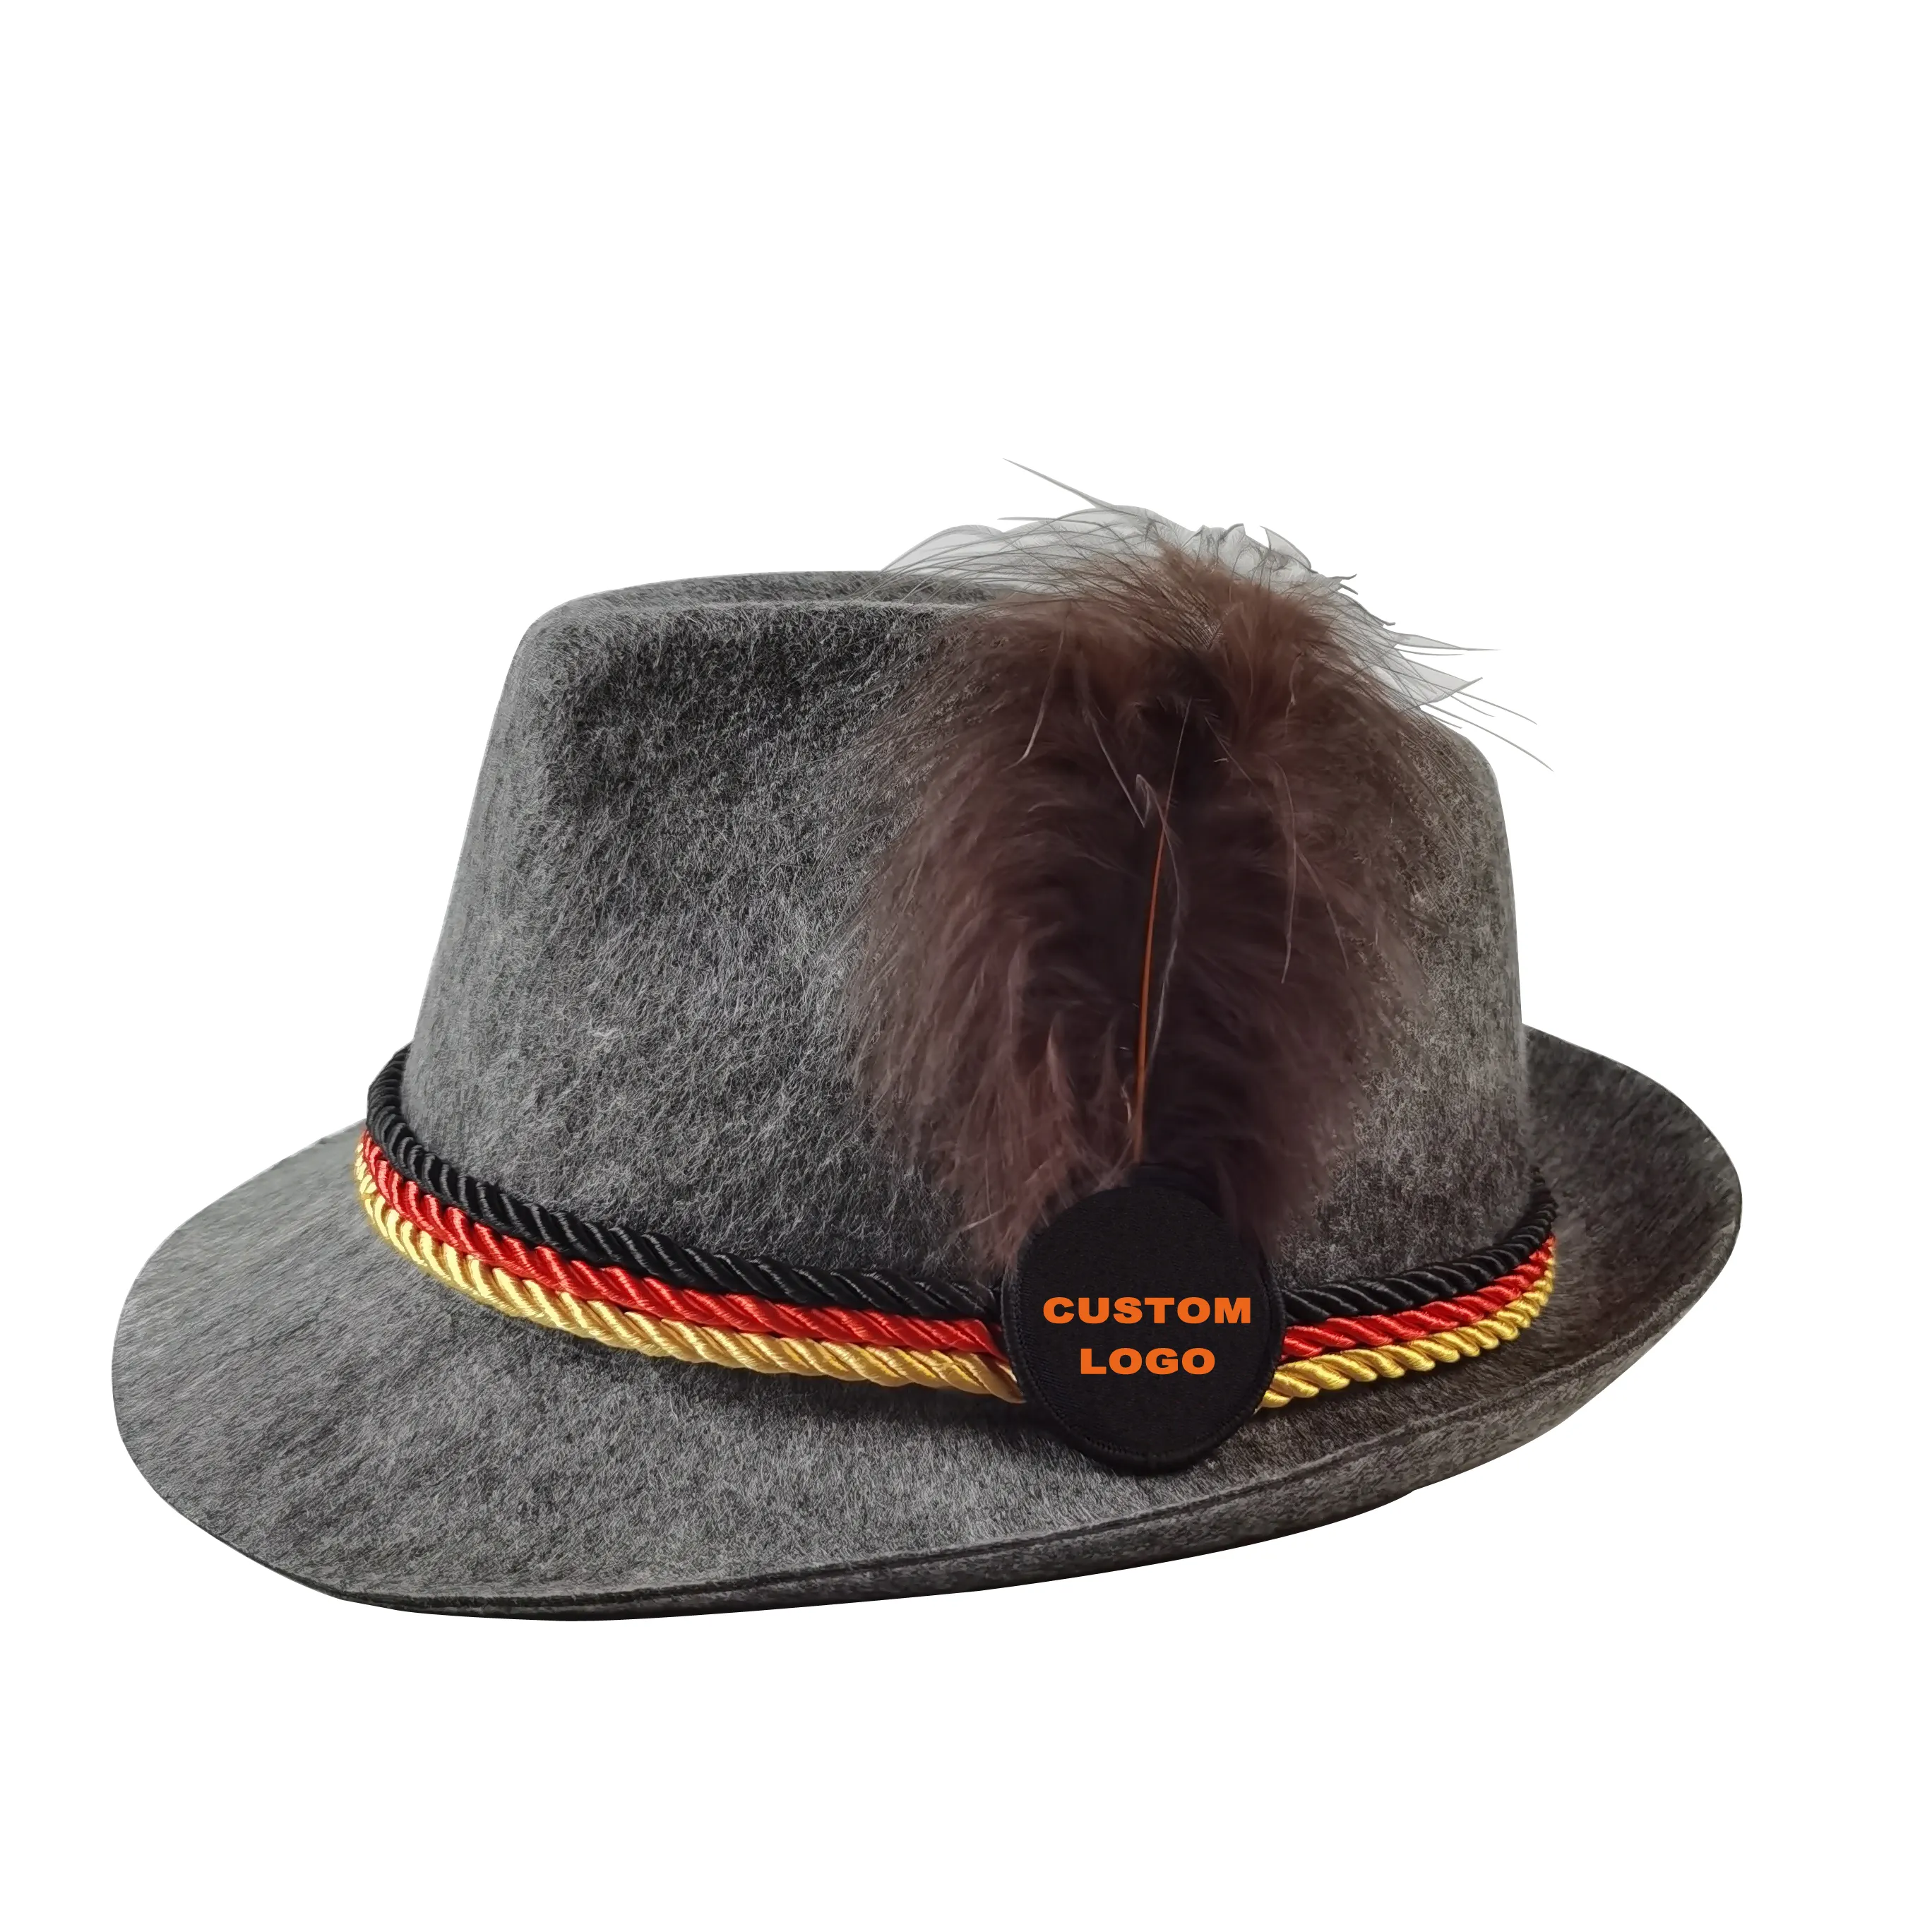 Sombrero alpine fedora de fieltro de Oktoberfest alemán, diseño personalizado tradicional, festival de cerveza, gris